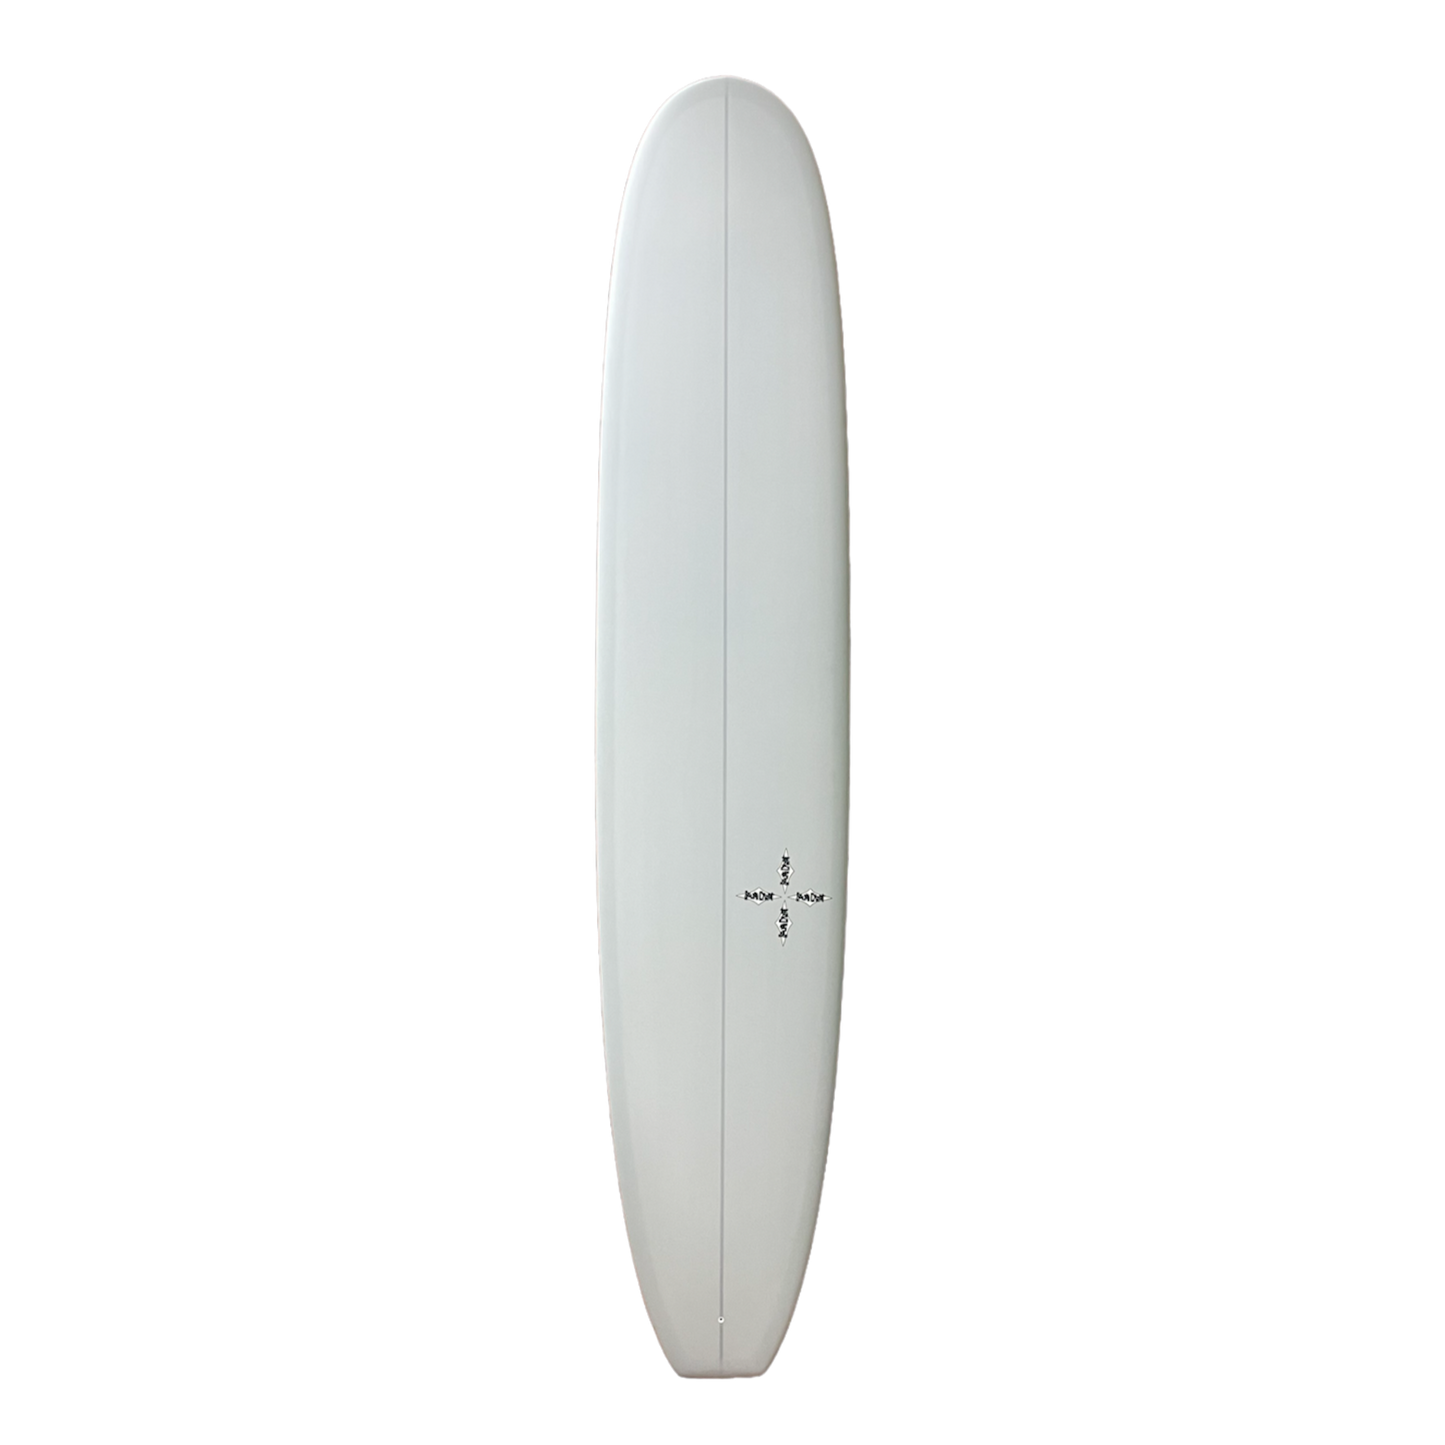 SOUTH COAST TALL CAN SURFBOARD 9'6”